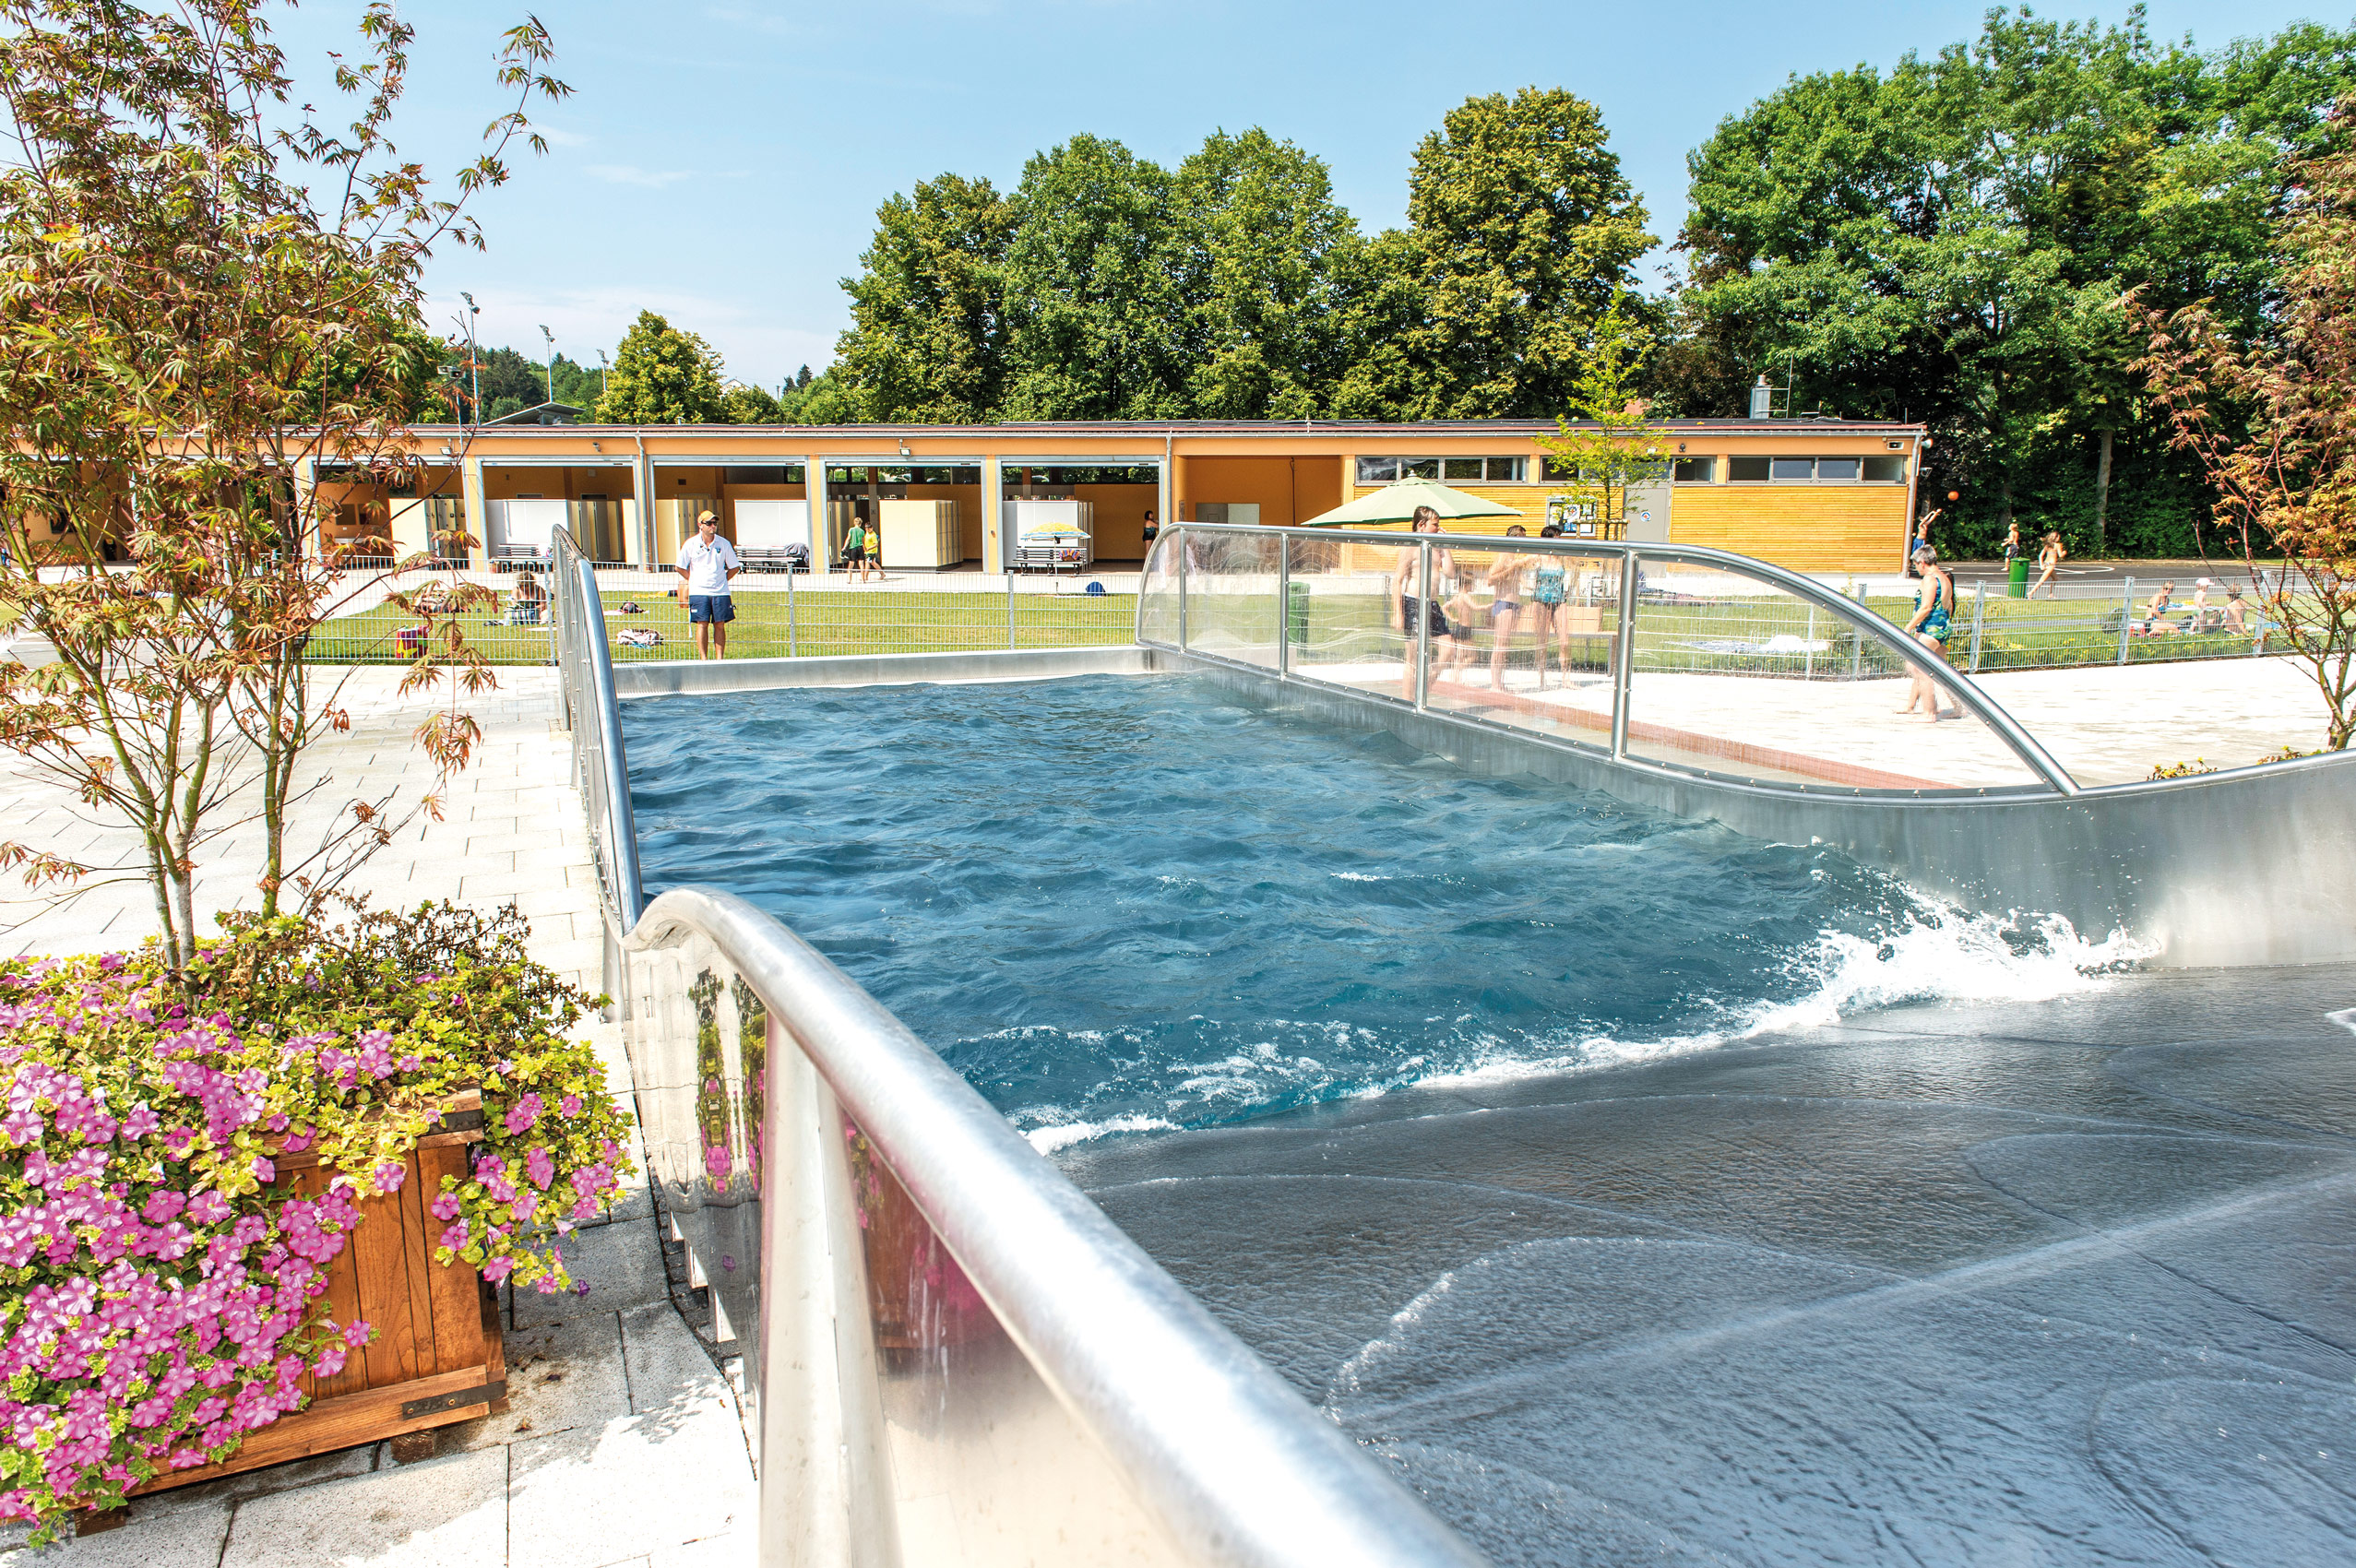 atlantics stainless steel slides open air swimming pool burgau bayern wide waves boxwater 127446